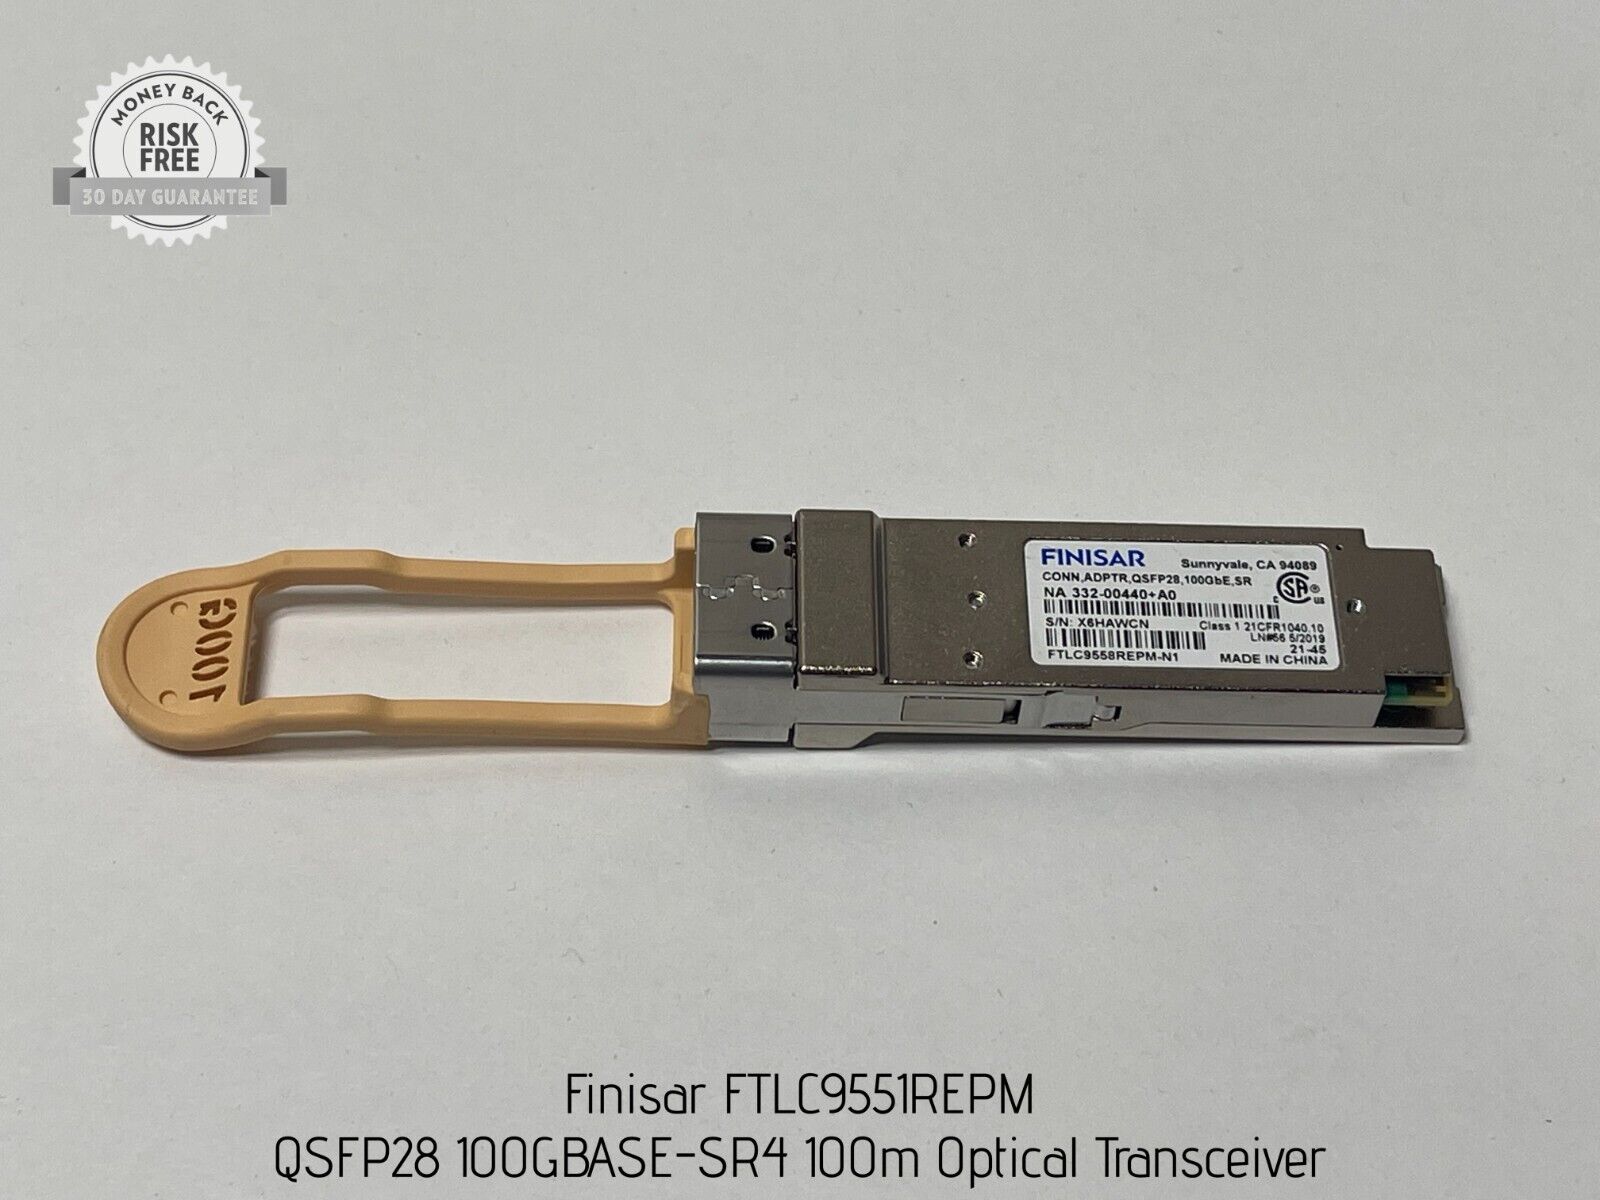 Finisar FTLC9551REPM QSFP28 100GBASE-SR4 100m Optical Transceiver